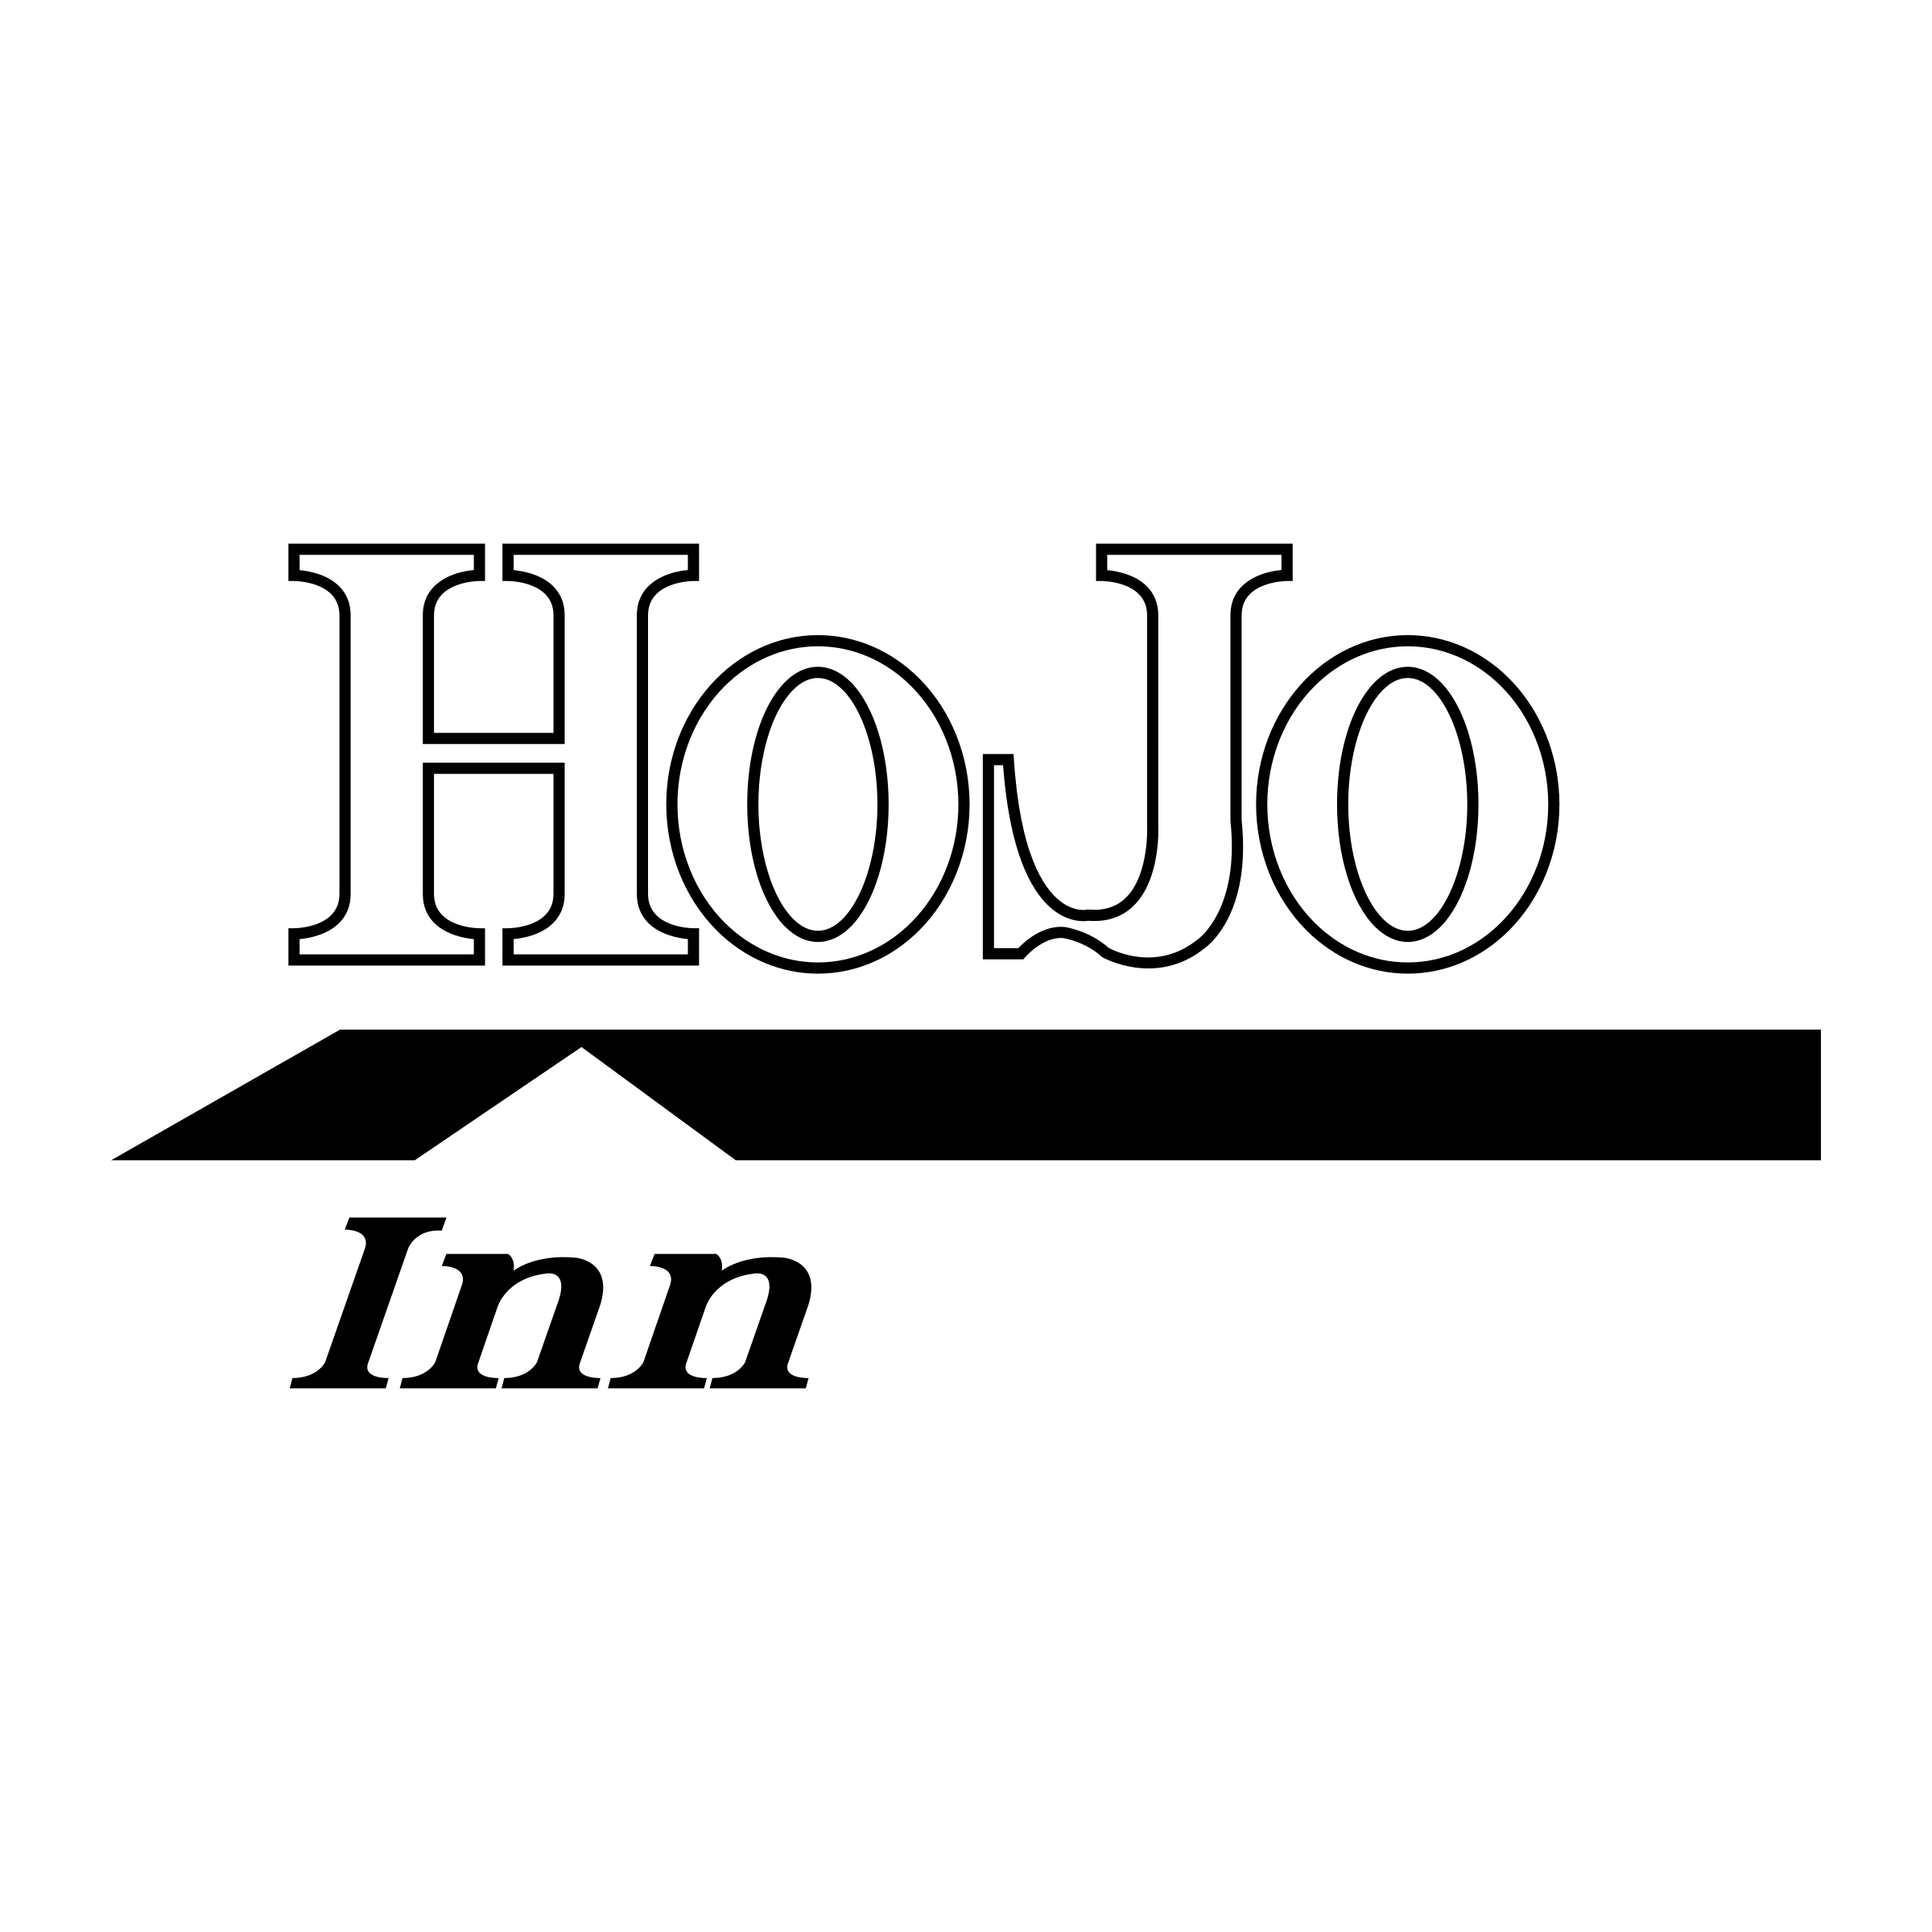 Hojo Logo - HoJo Inn Logo PNG Transparent & SVG Vector - Freebie Supply